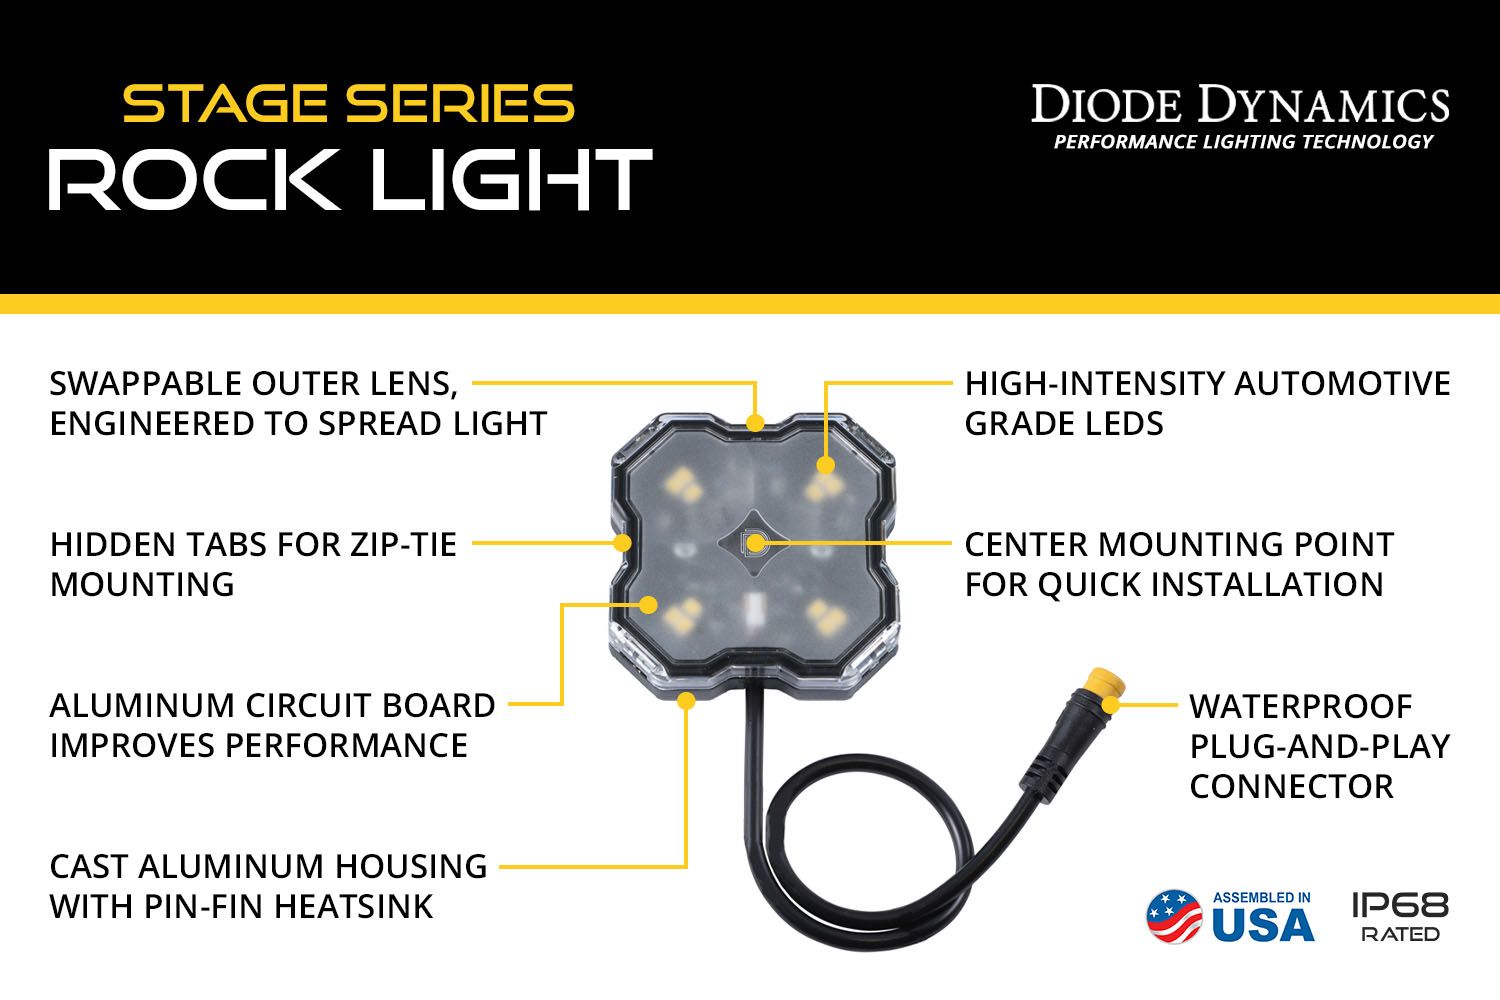 Stage Series Single-Color LED Rock Light (4-pack)